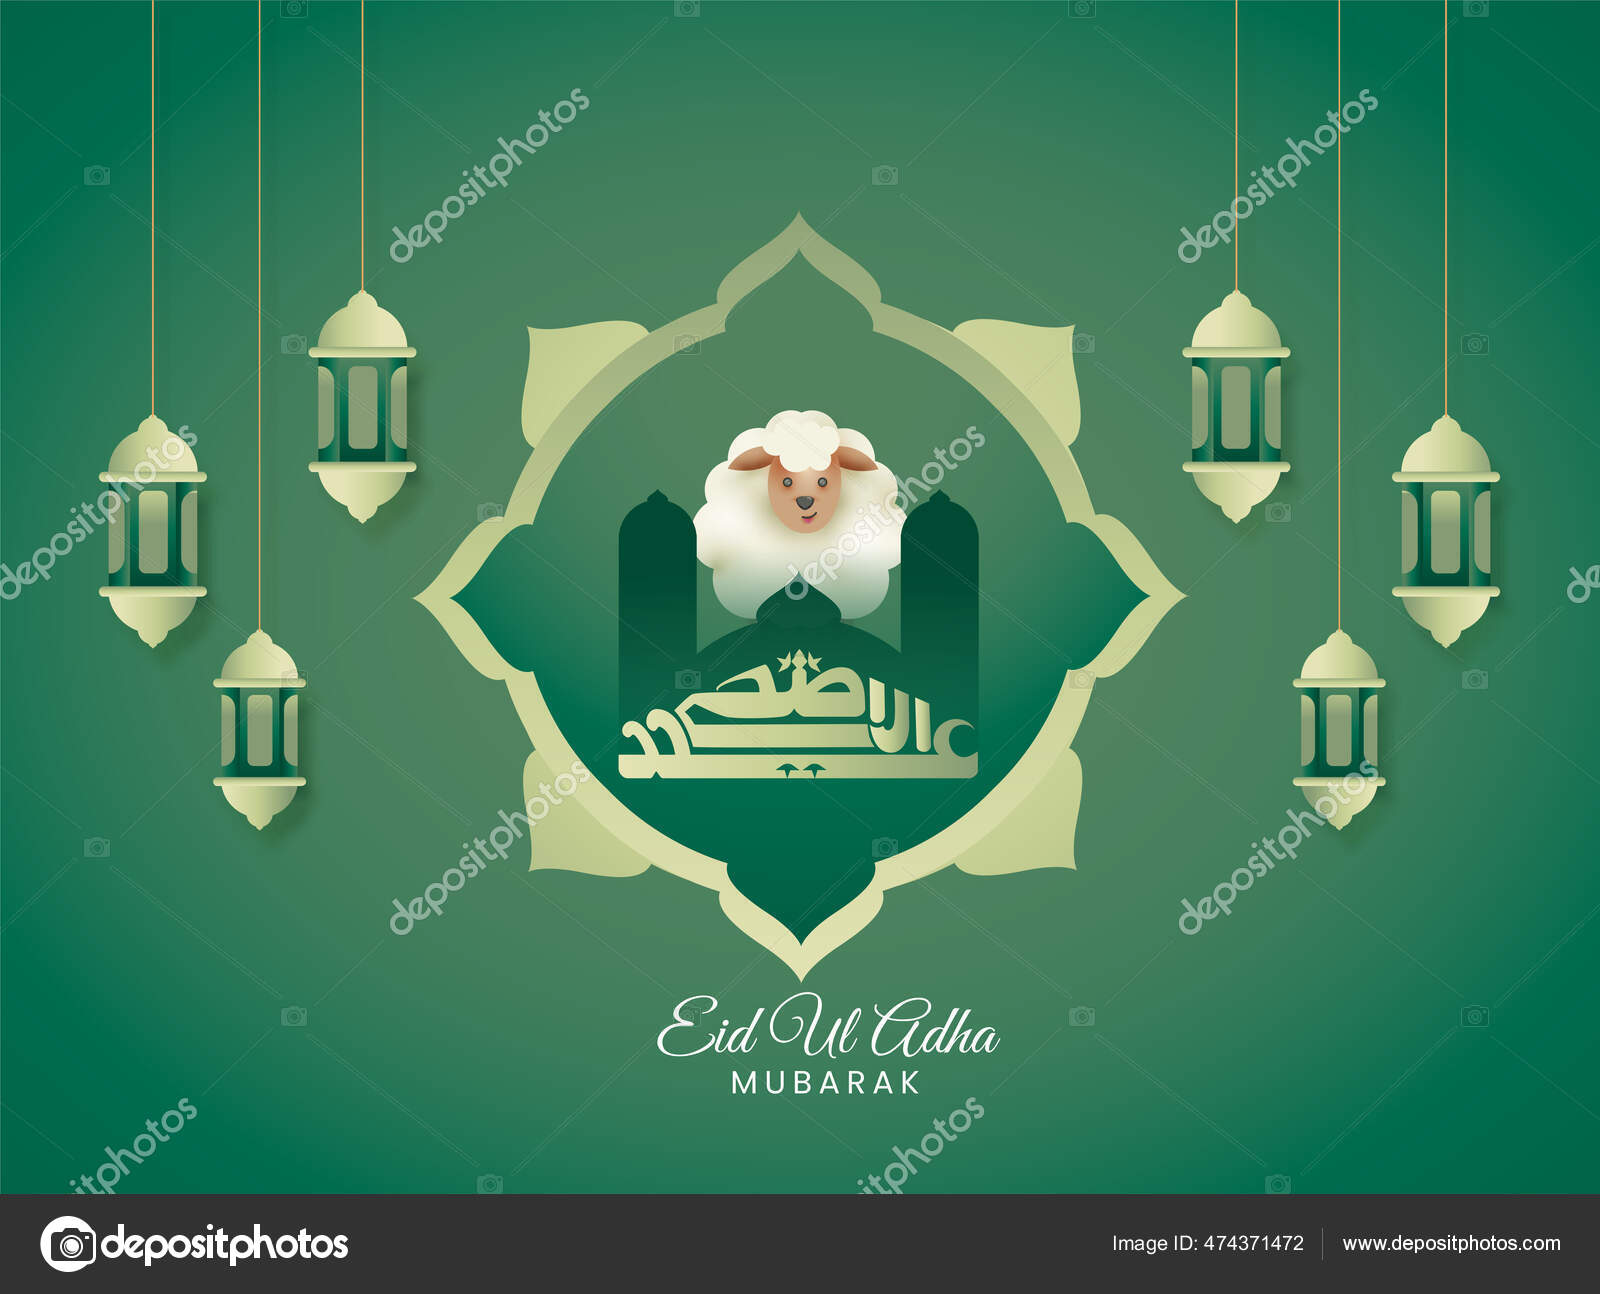 Eid ul azha Vector Art Stock Images | Depositphotos